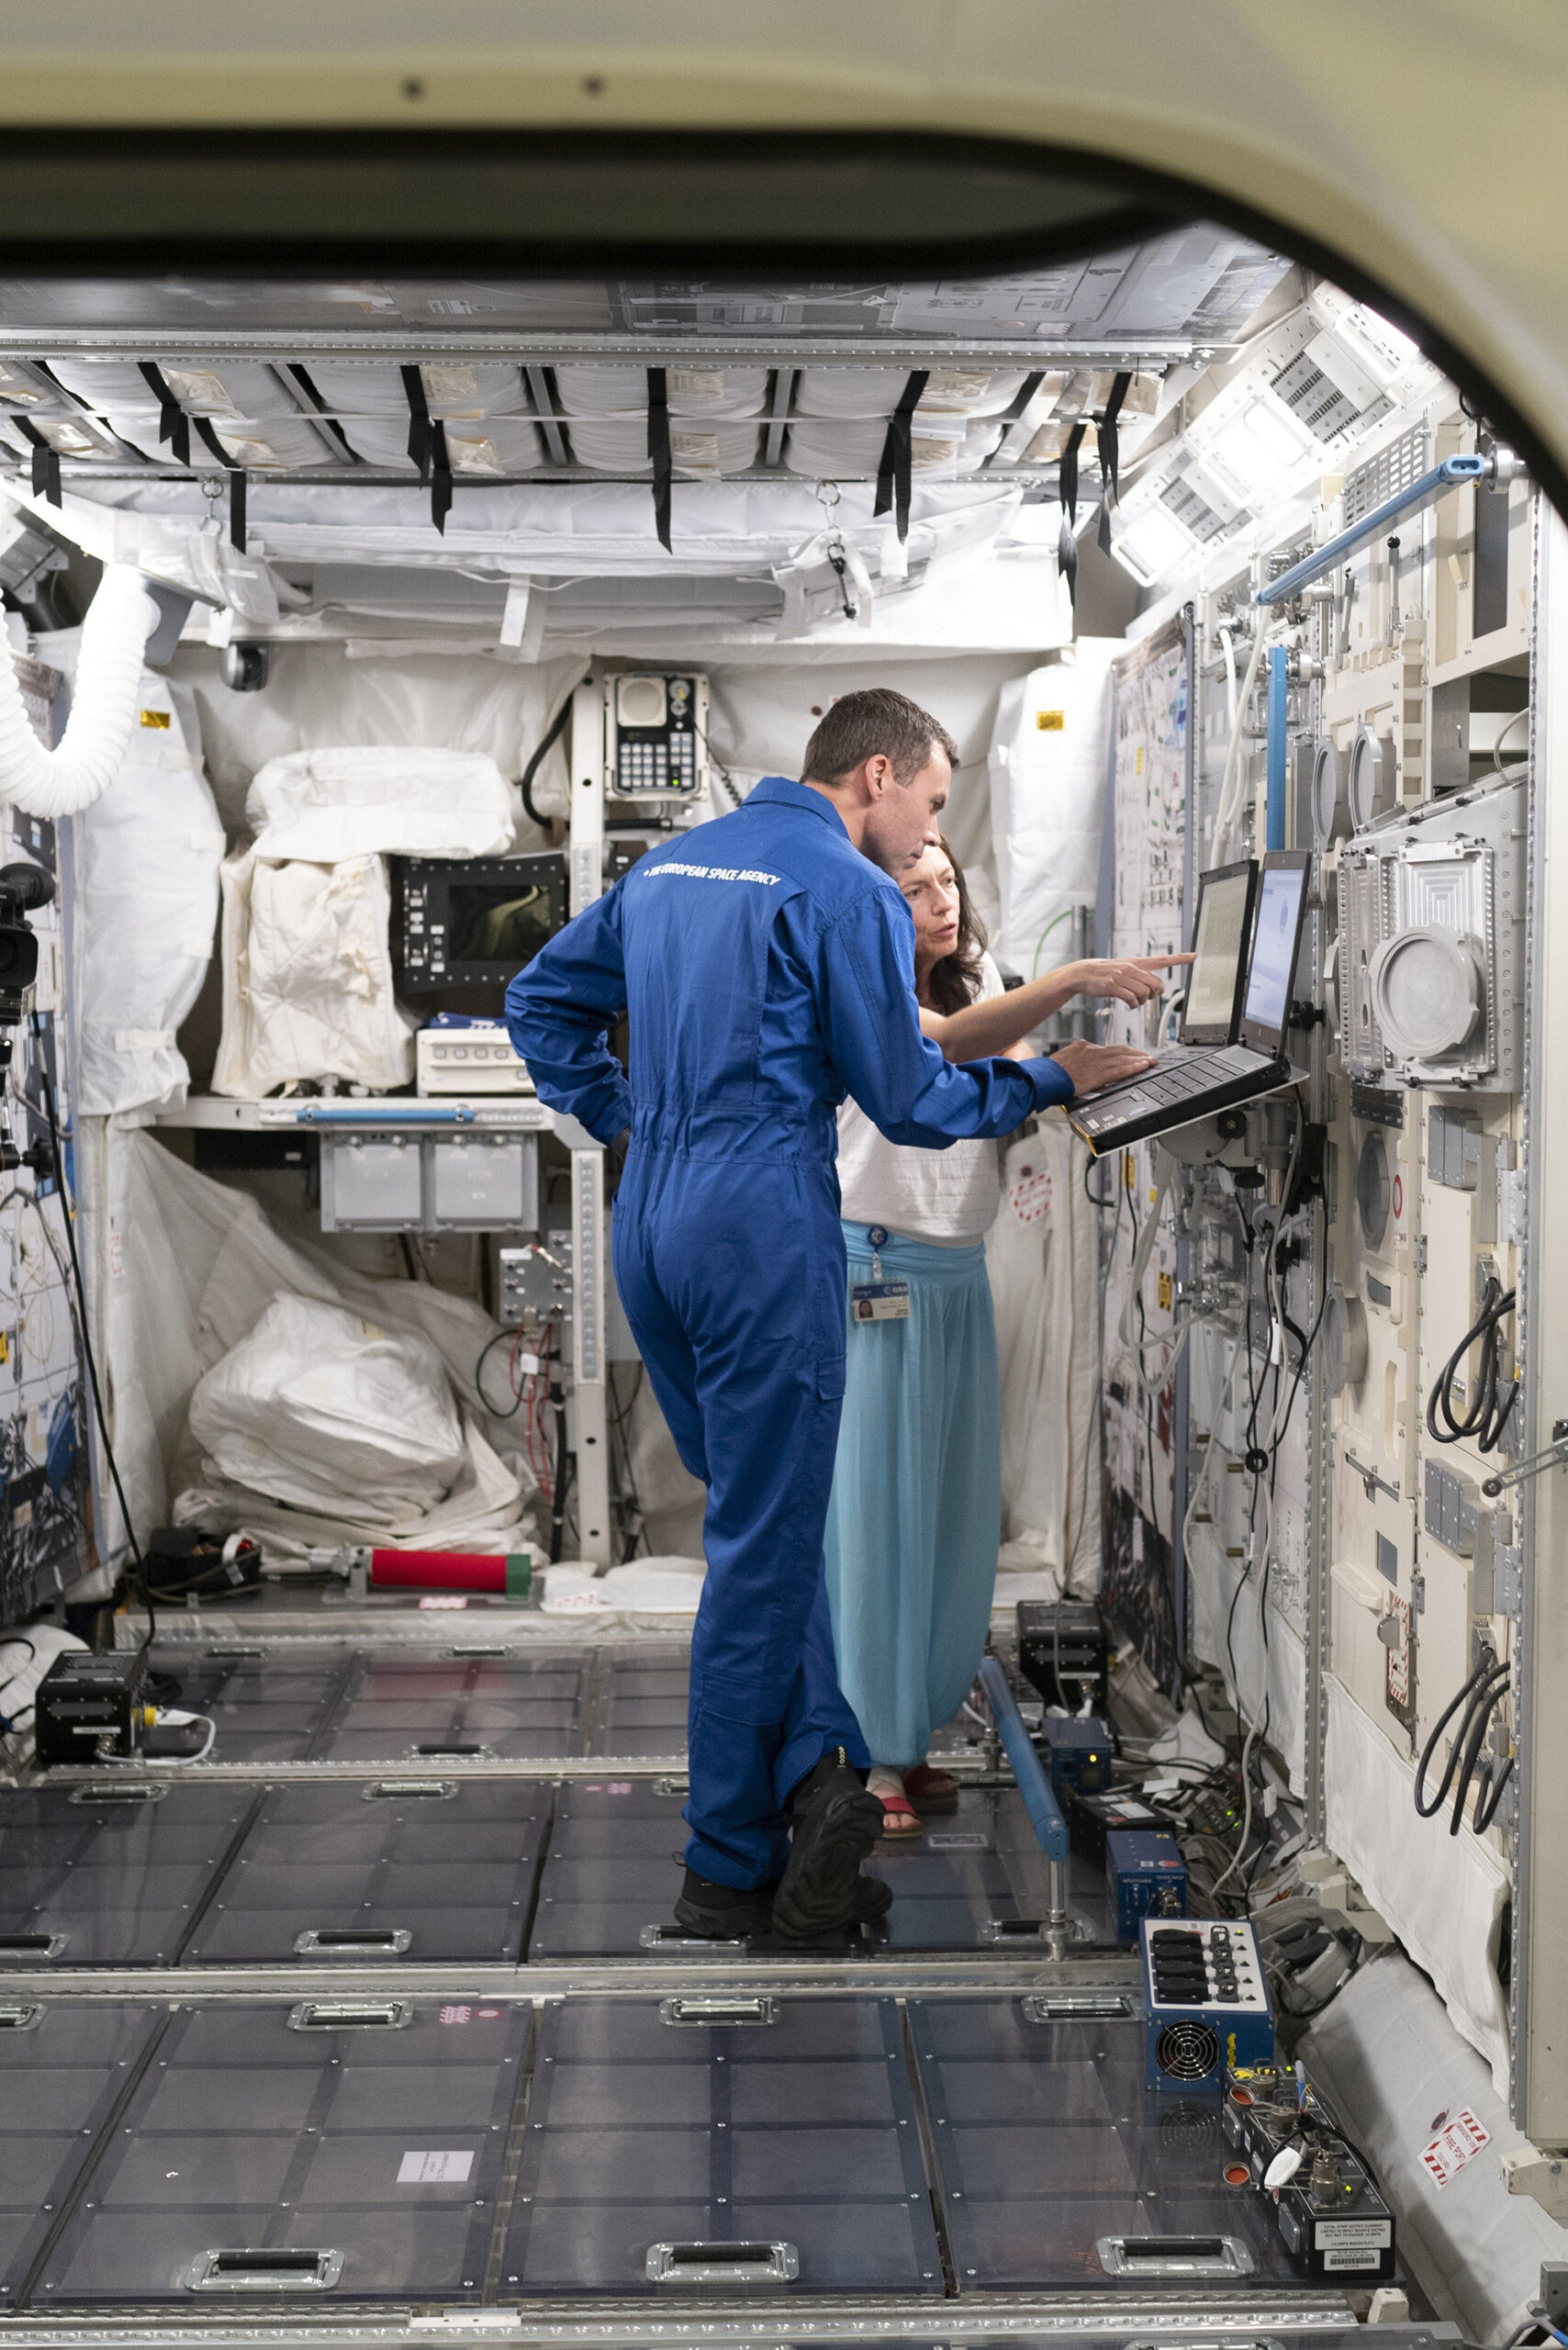 Marcus Wandt training at the European Astronaut Centre